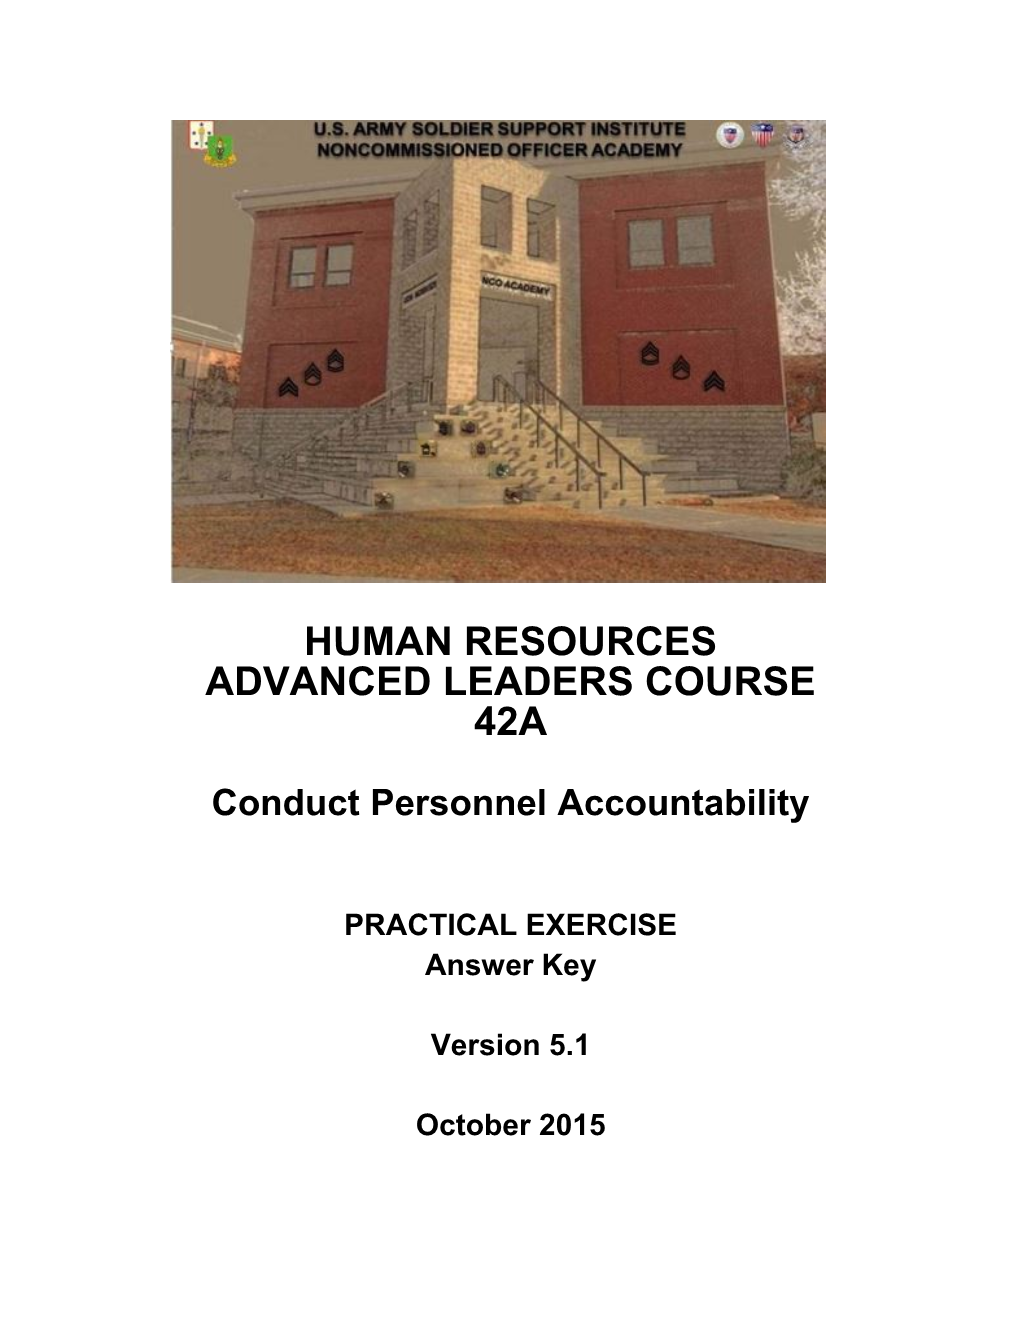 ALC Conduct Personnel Accountability PE AK